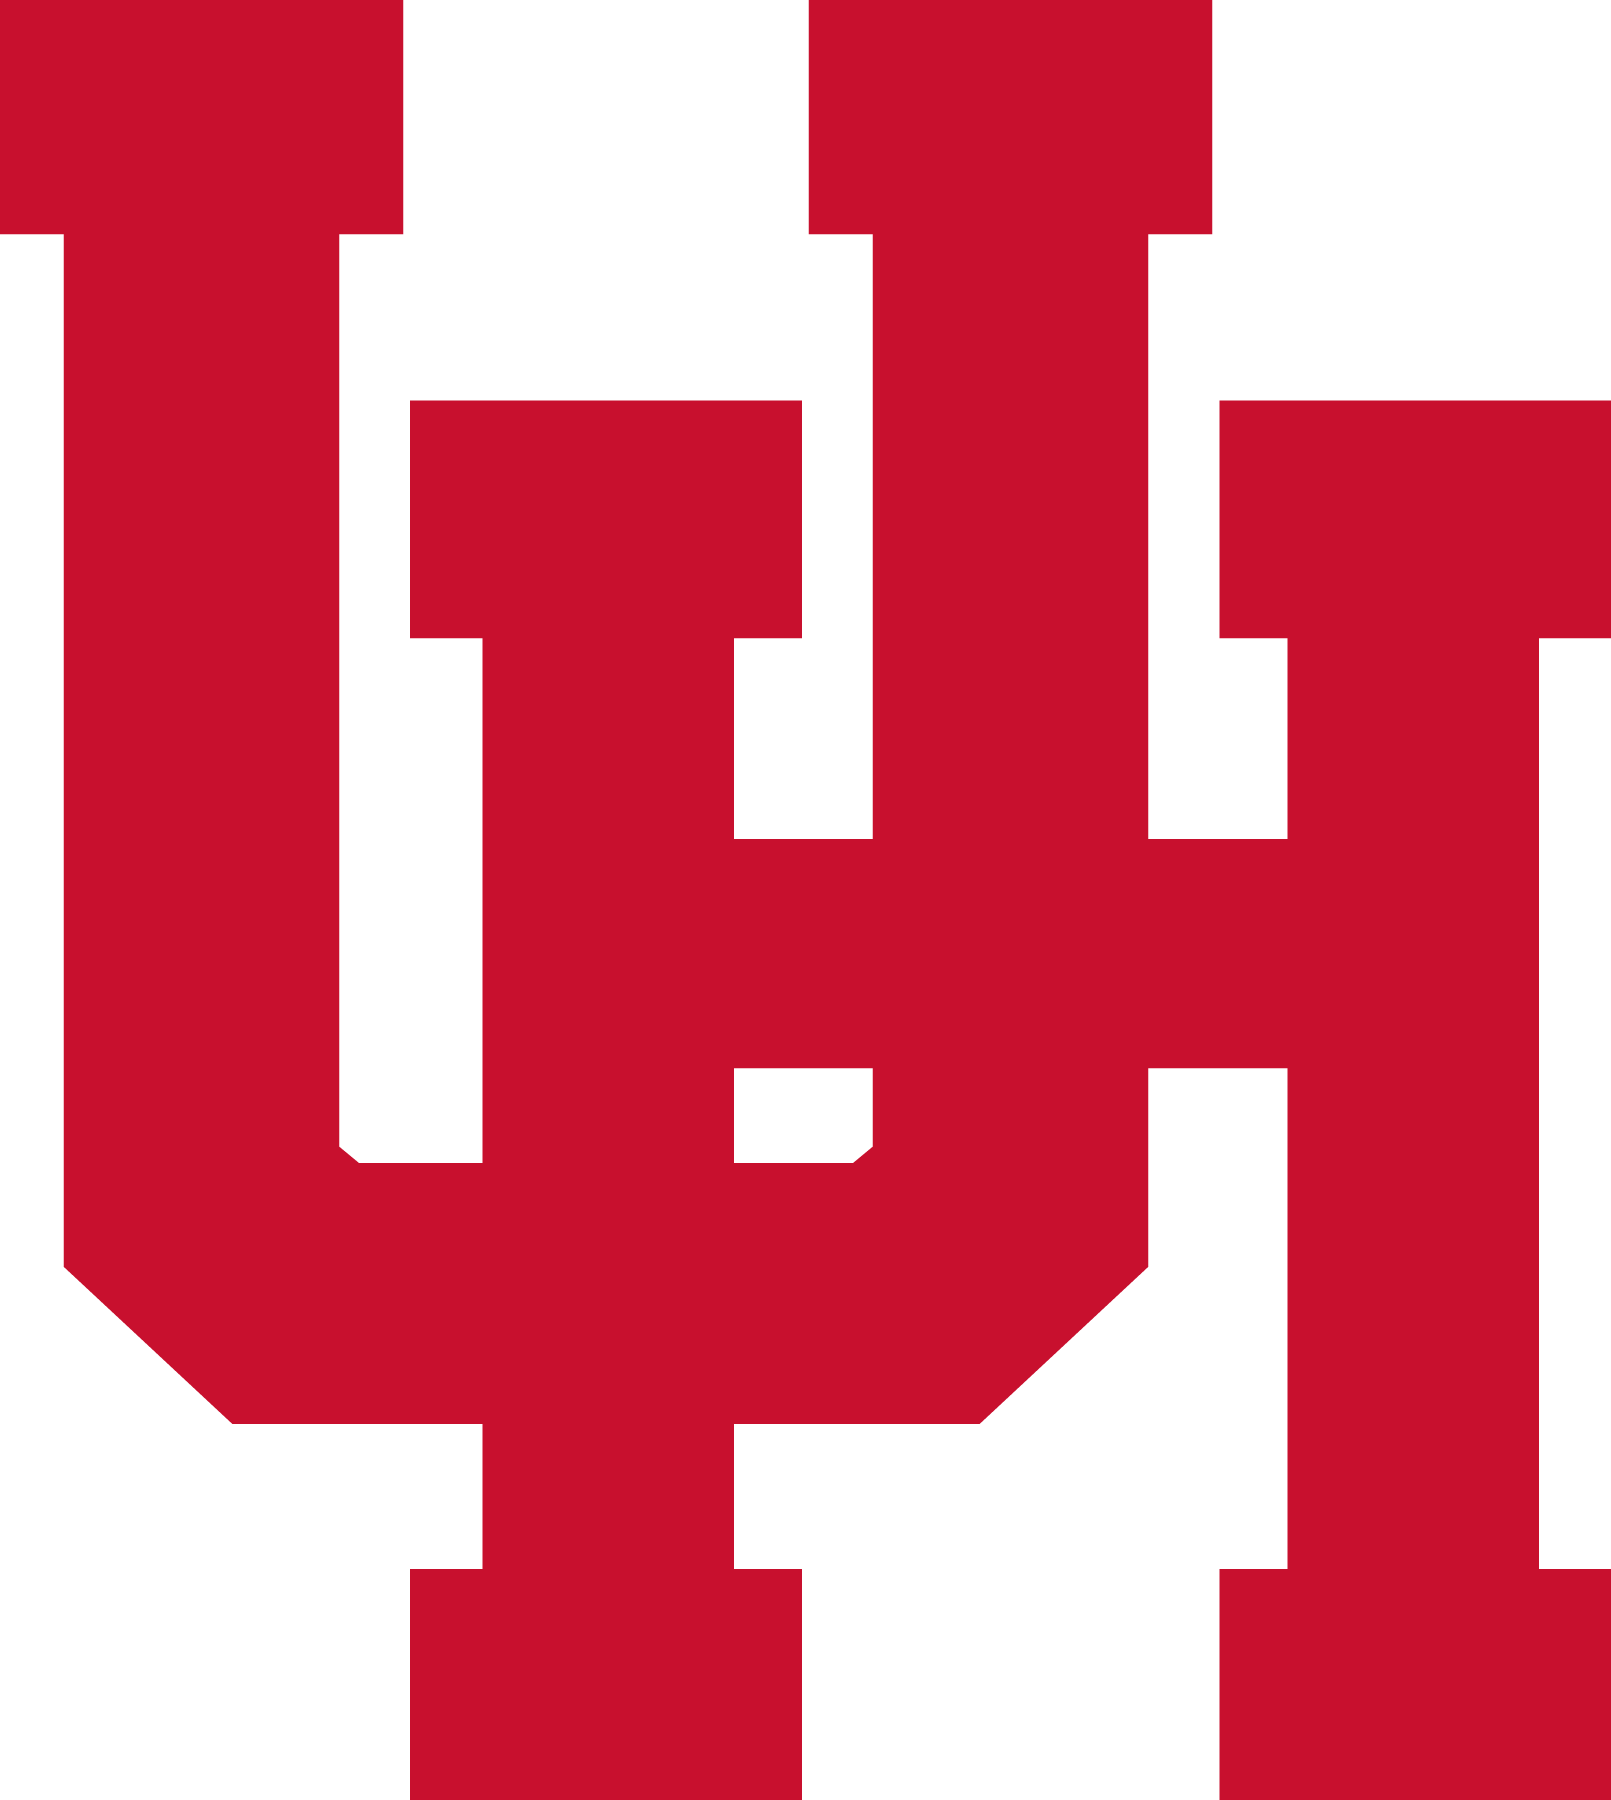 Houston Logo - File:University of Houston Collegiate Logo.png - Wikimedia Commons